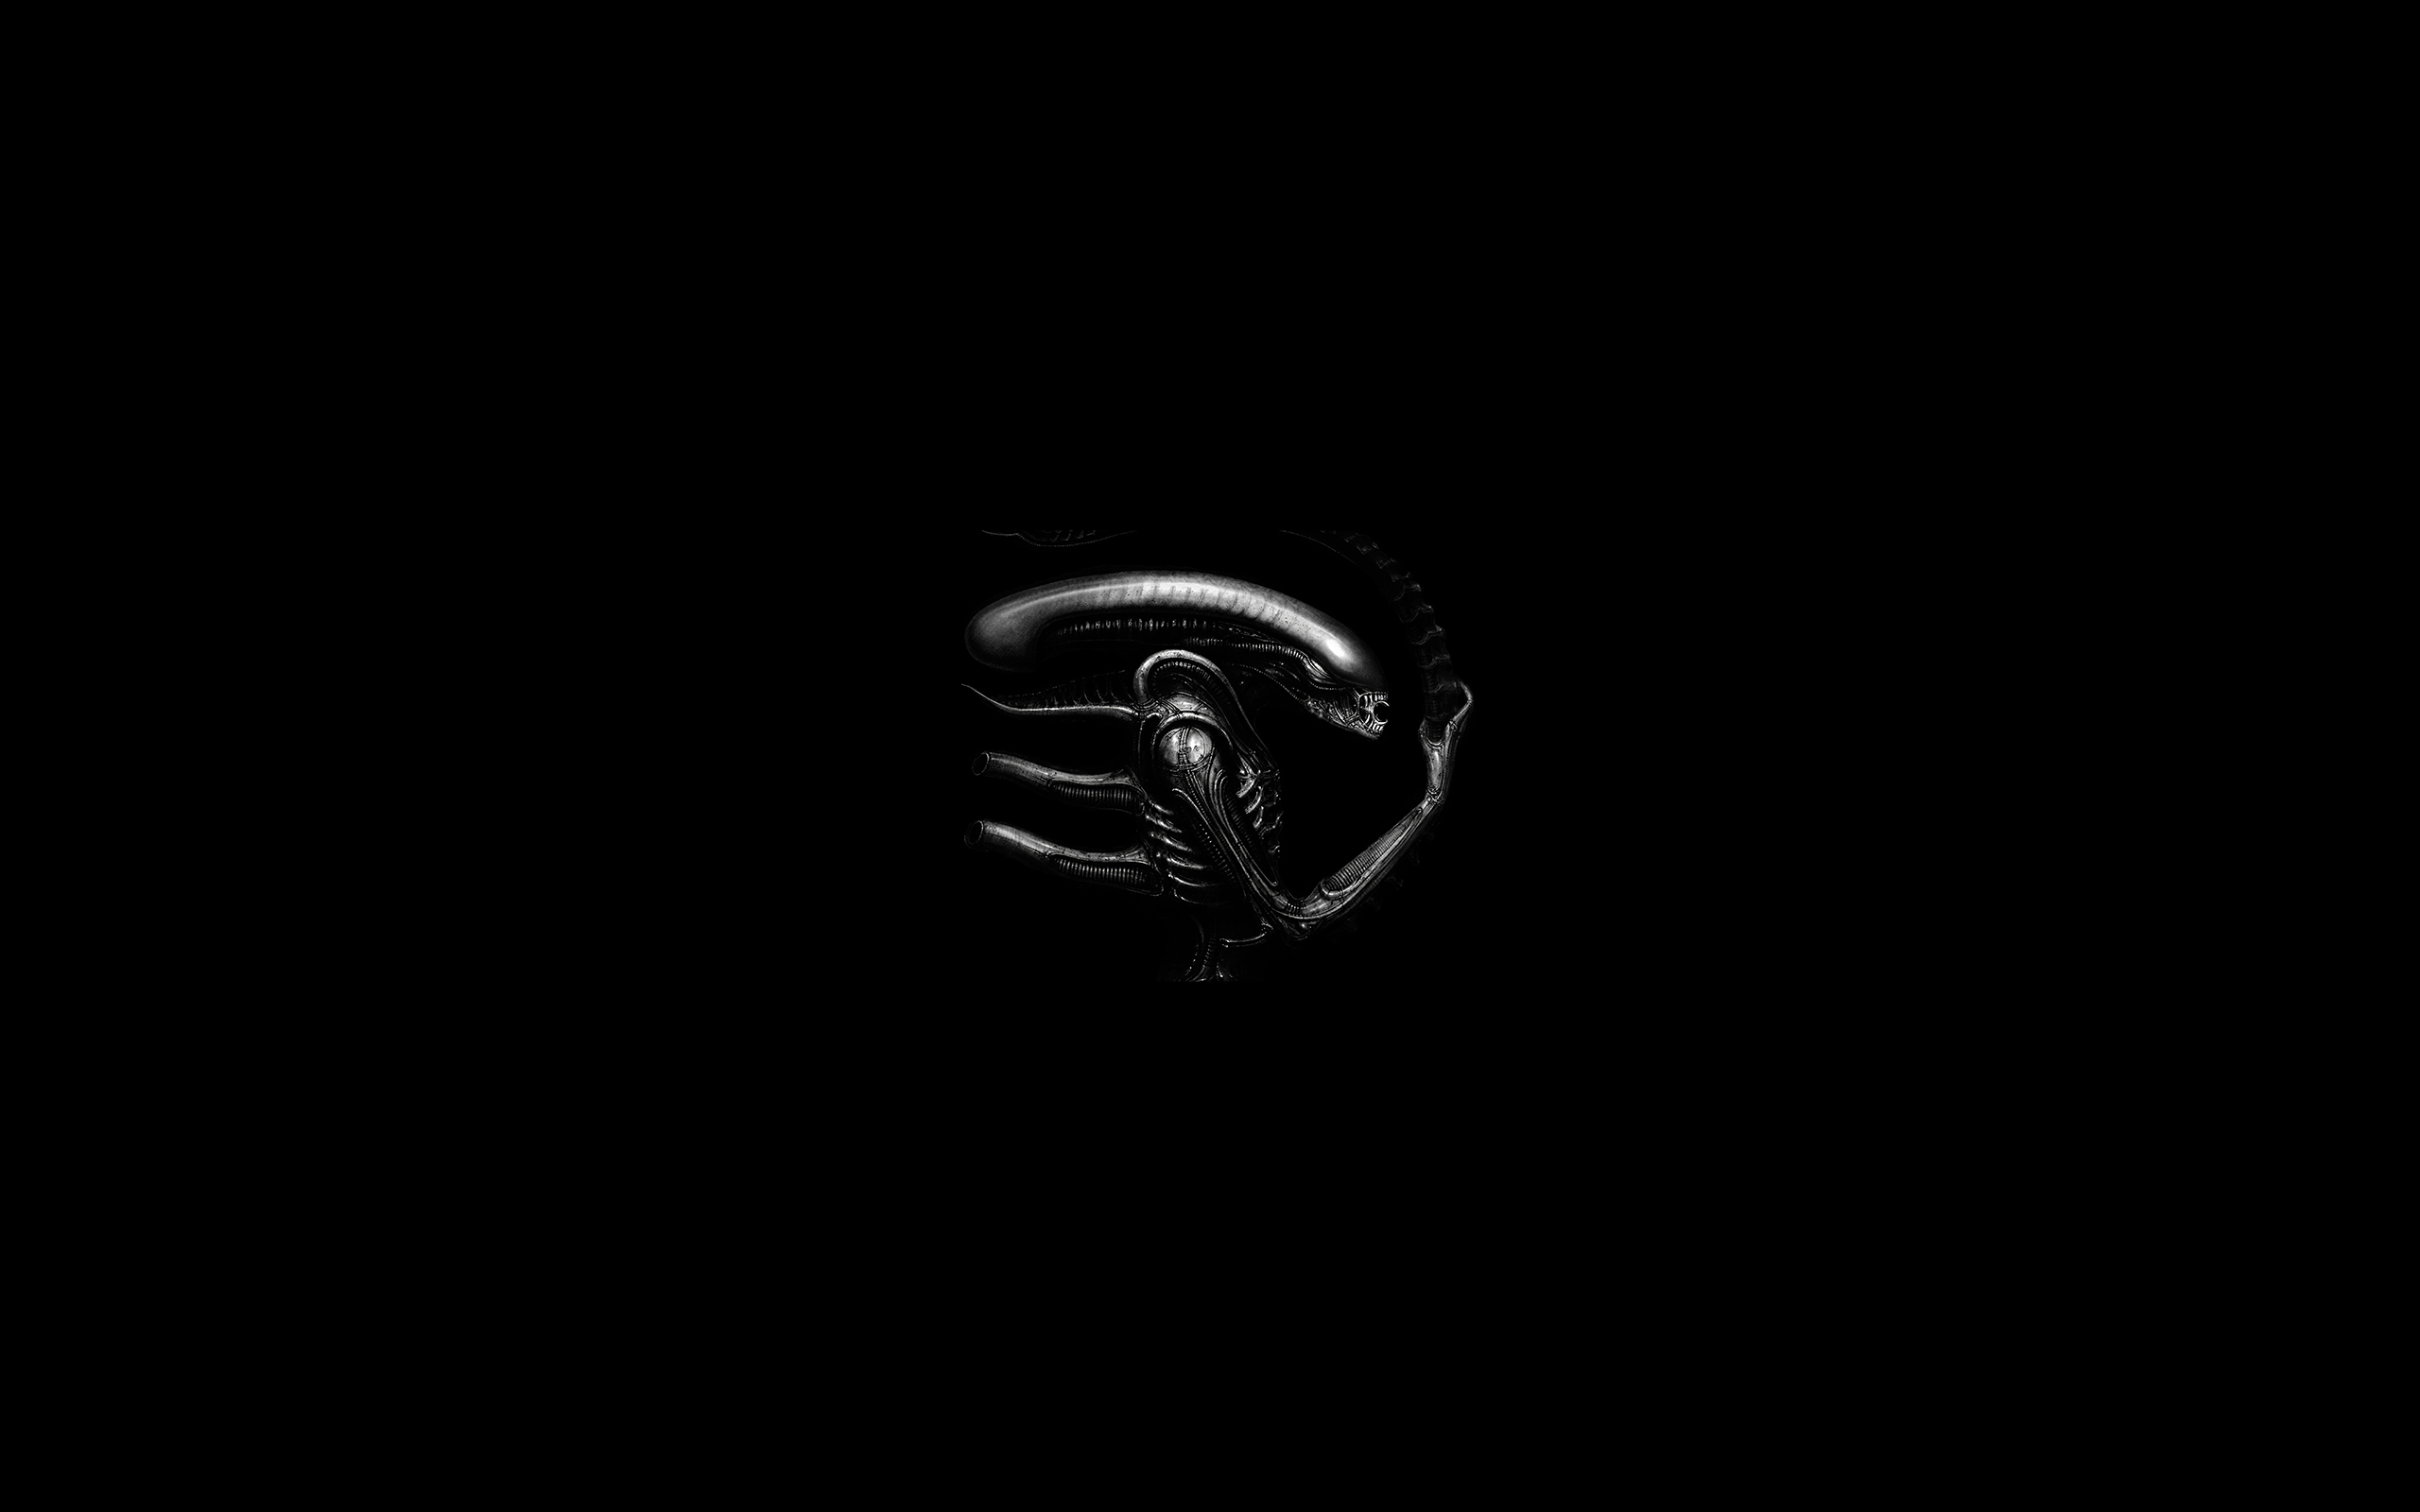 General 2560x1600 Xenomorph monochrome black minimalism science fiction horror Alien (Creature) simple background black background movie characters